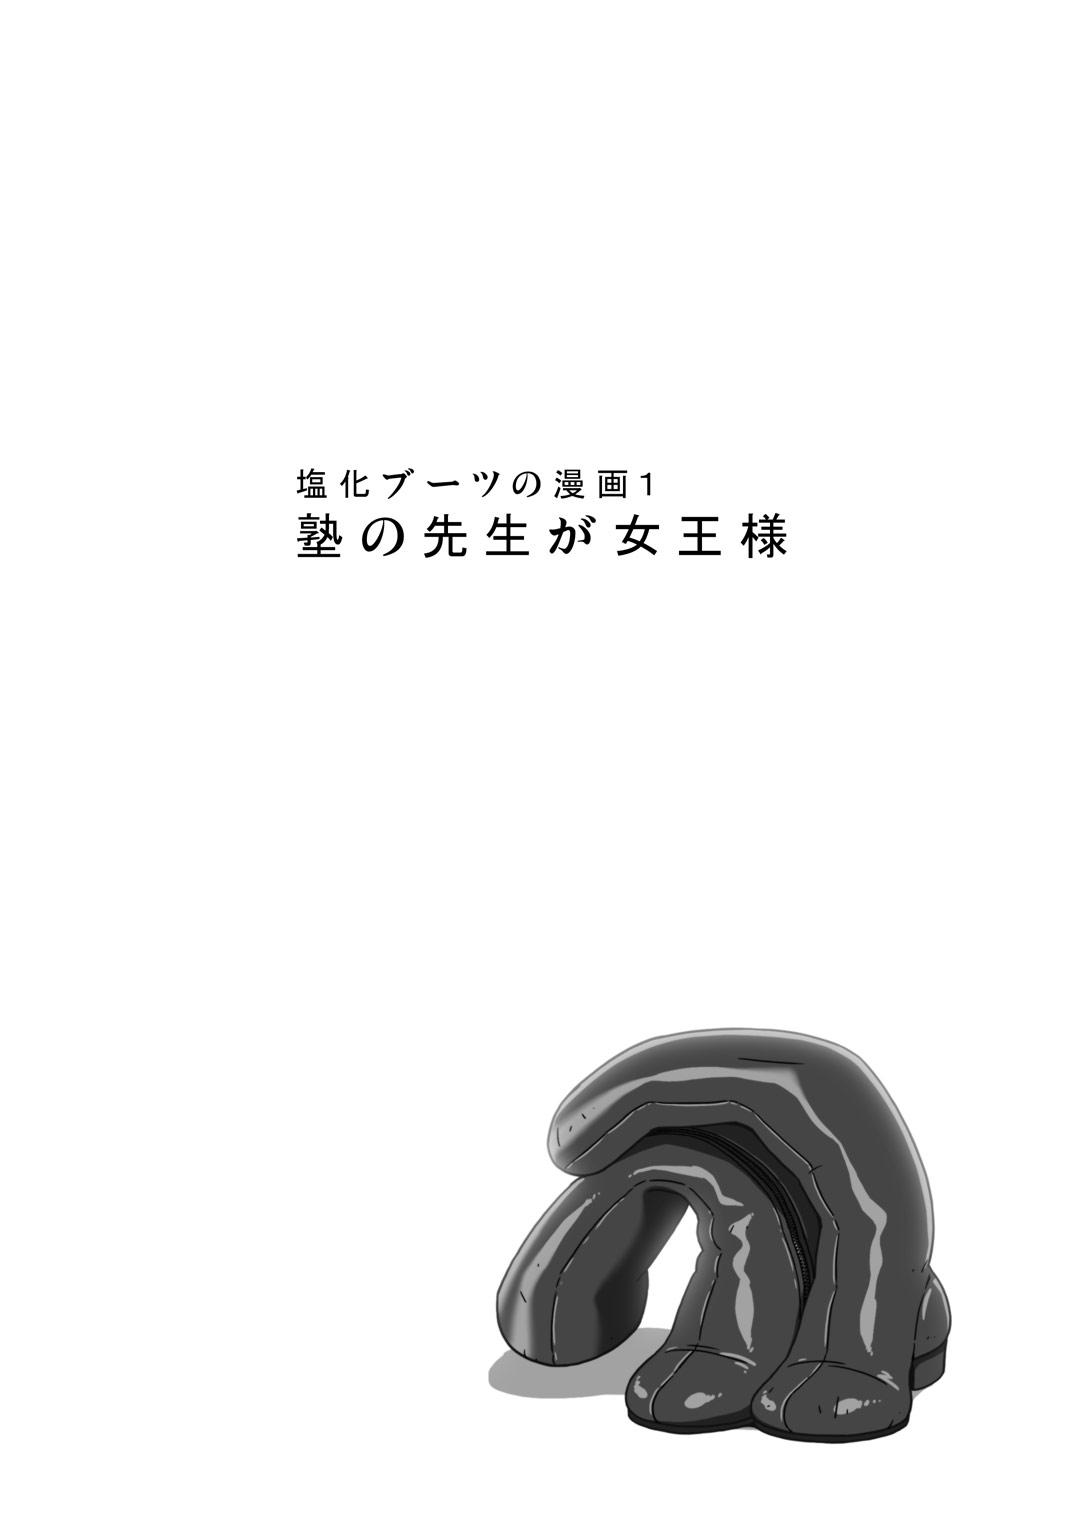 Enka Boots no Manga 1sama 4